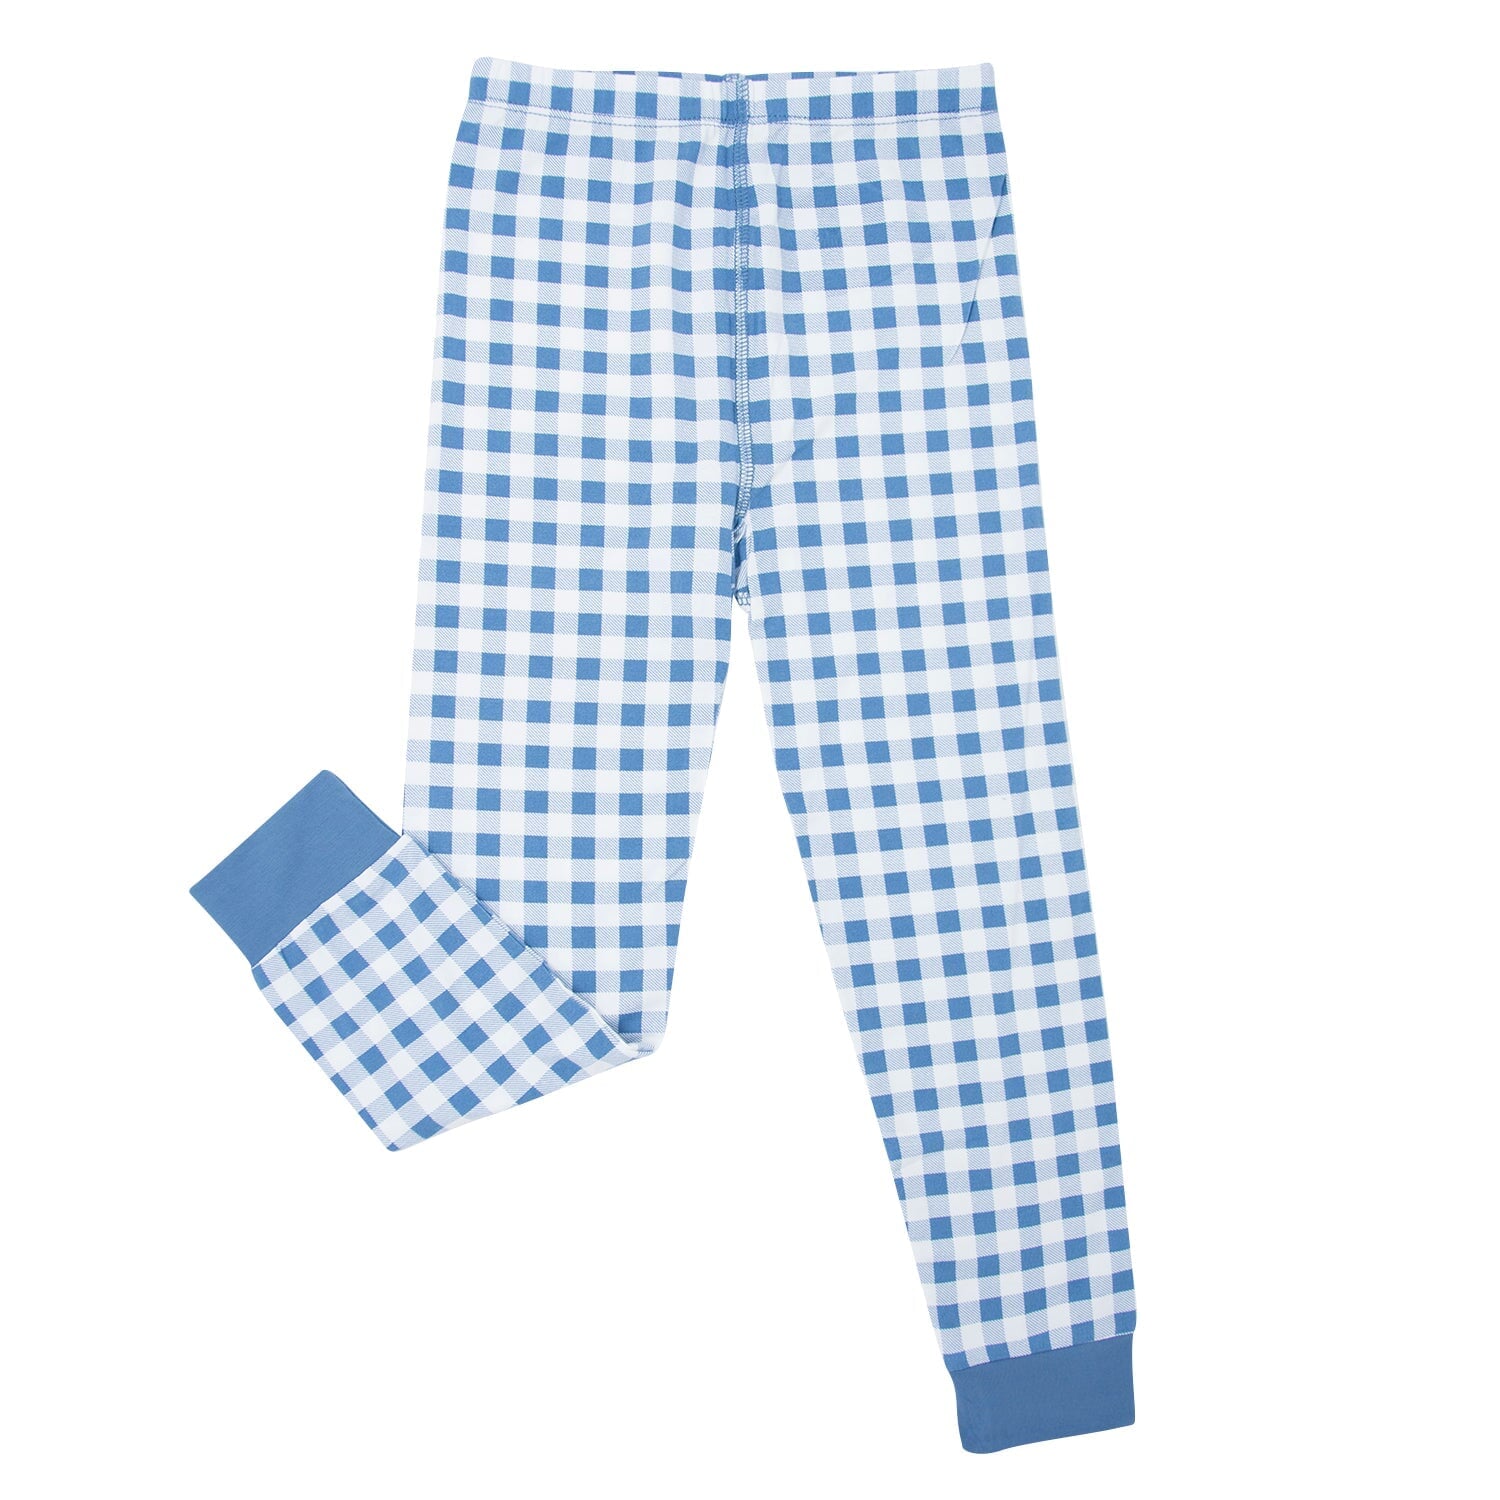 Big Kid Pajama - Blue Gingham